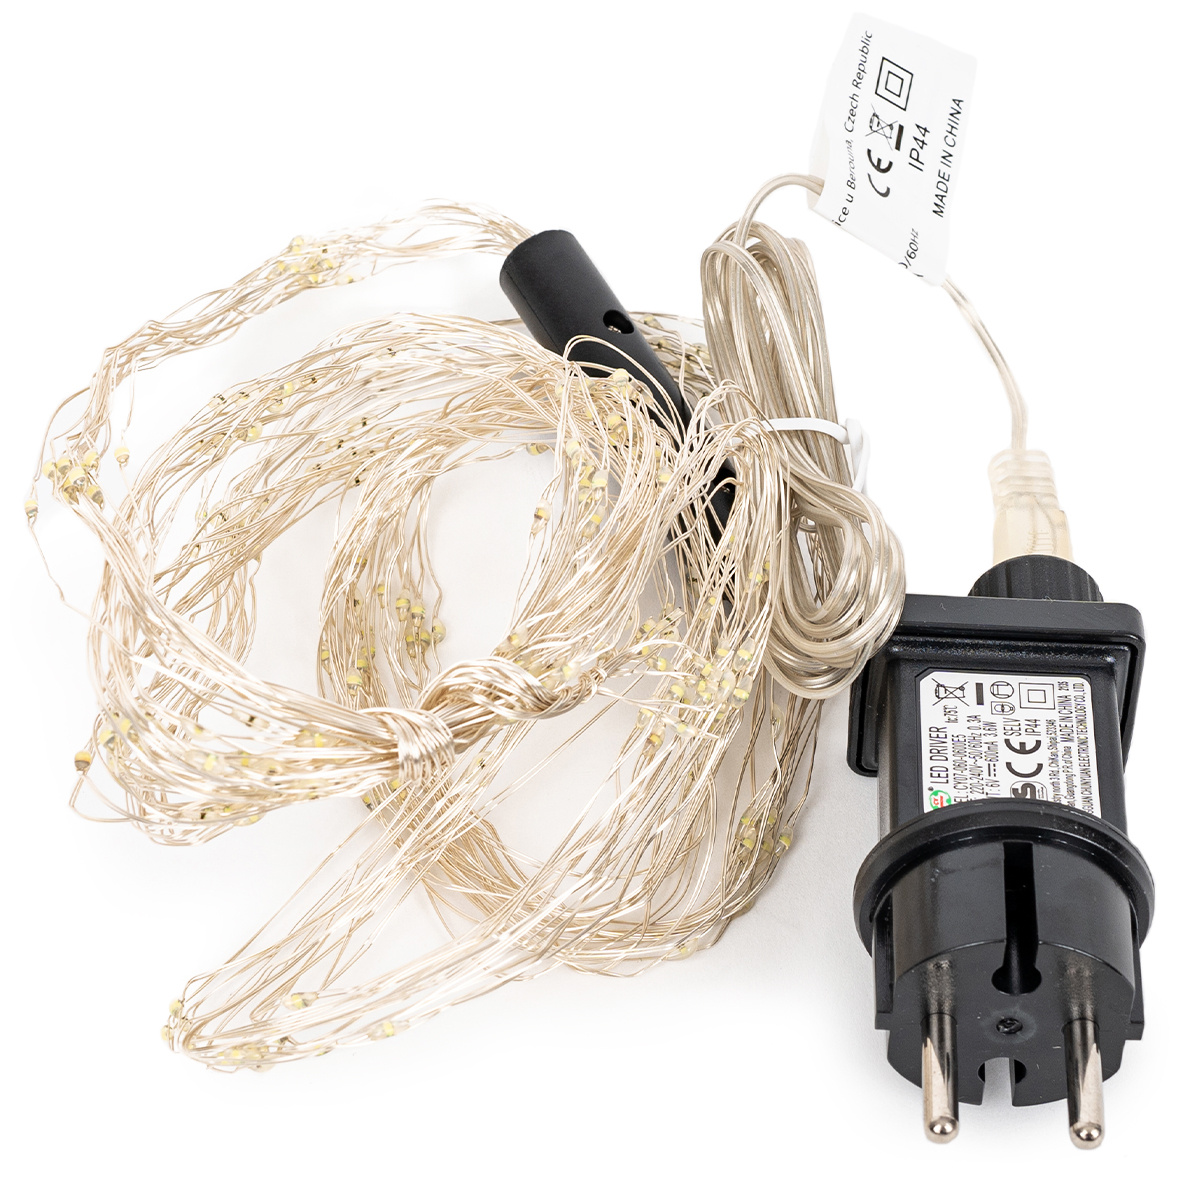 Světelný drát s LED diodami Francis, do zásuvky, studená bílá, 200 cm